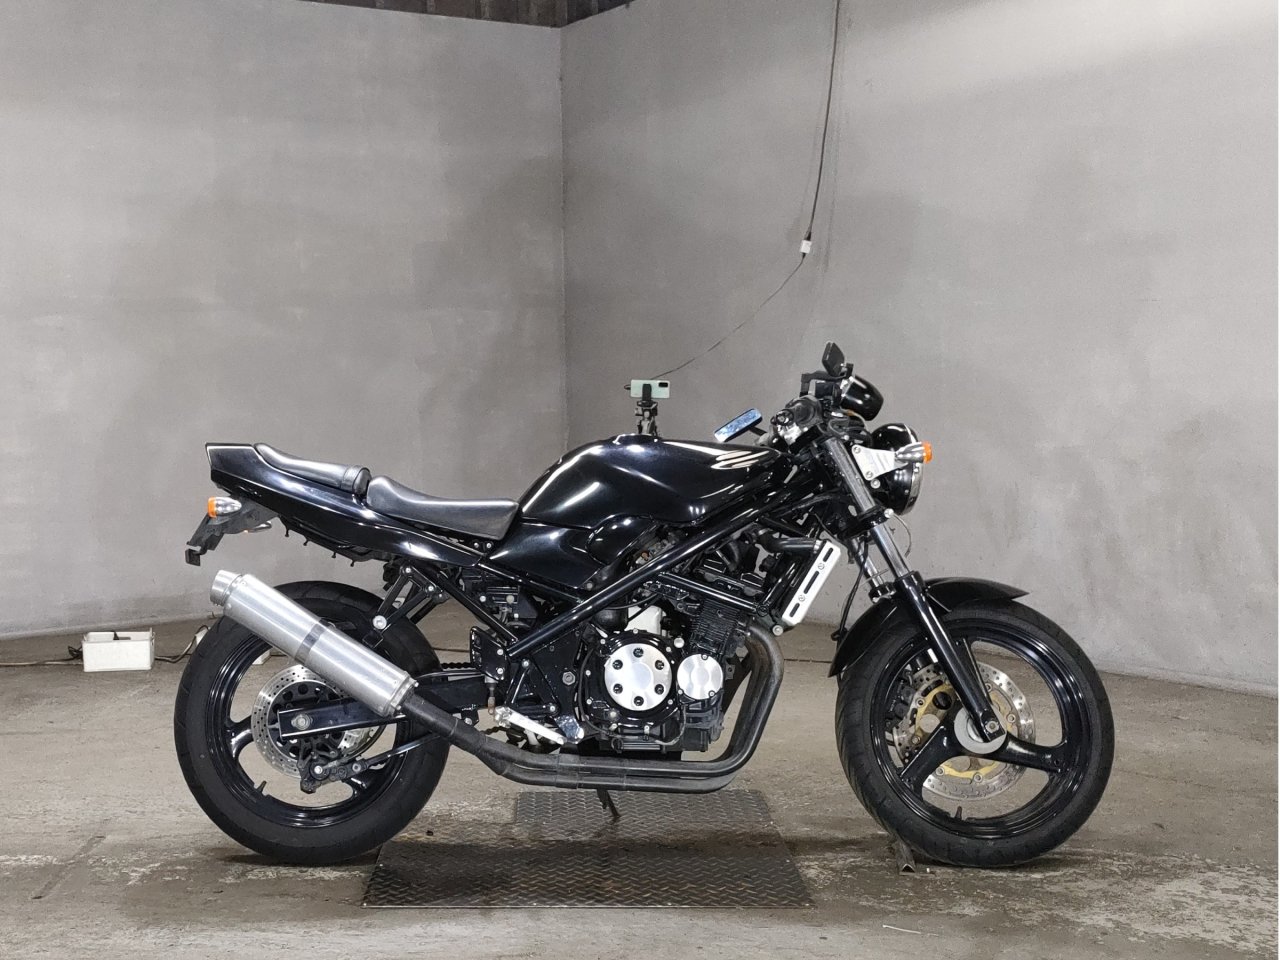 Suzuki Bandit 250 - Adamoto - Motorcycles from Japan